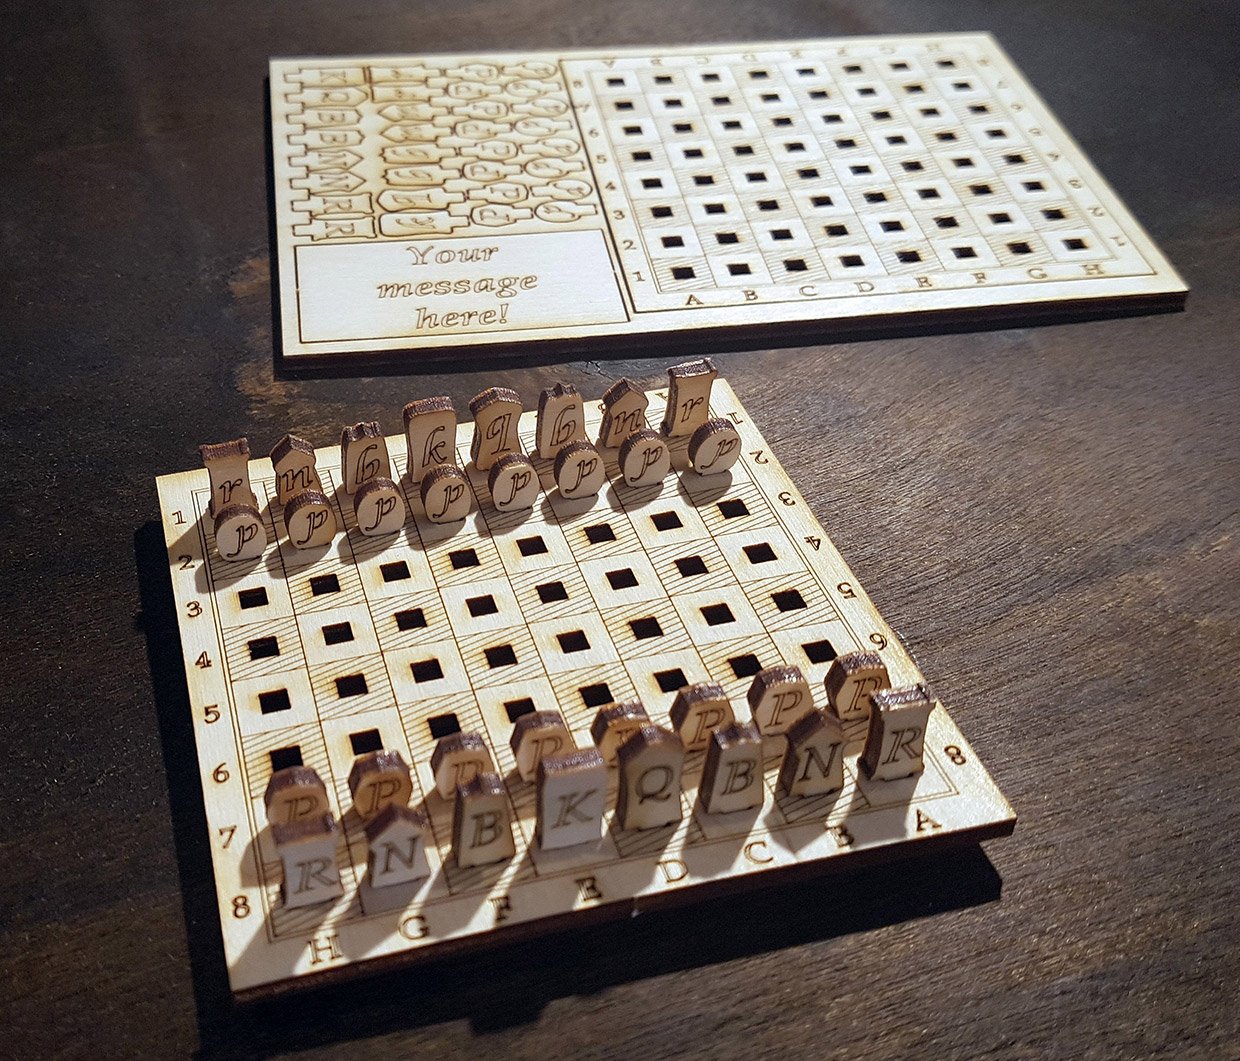 Mini Wood Chess Set